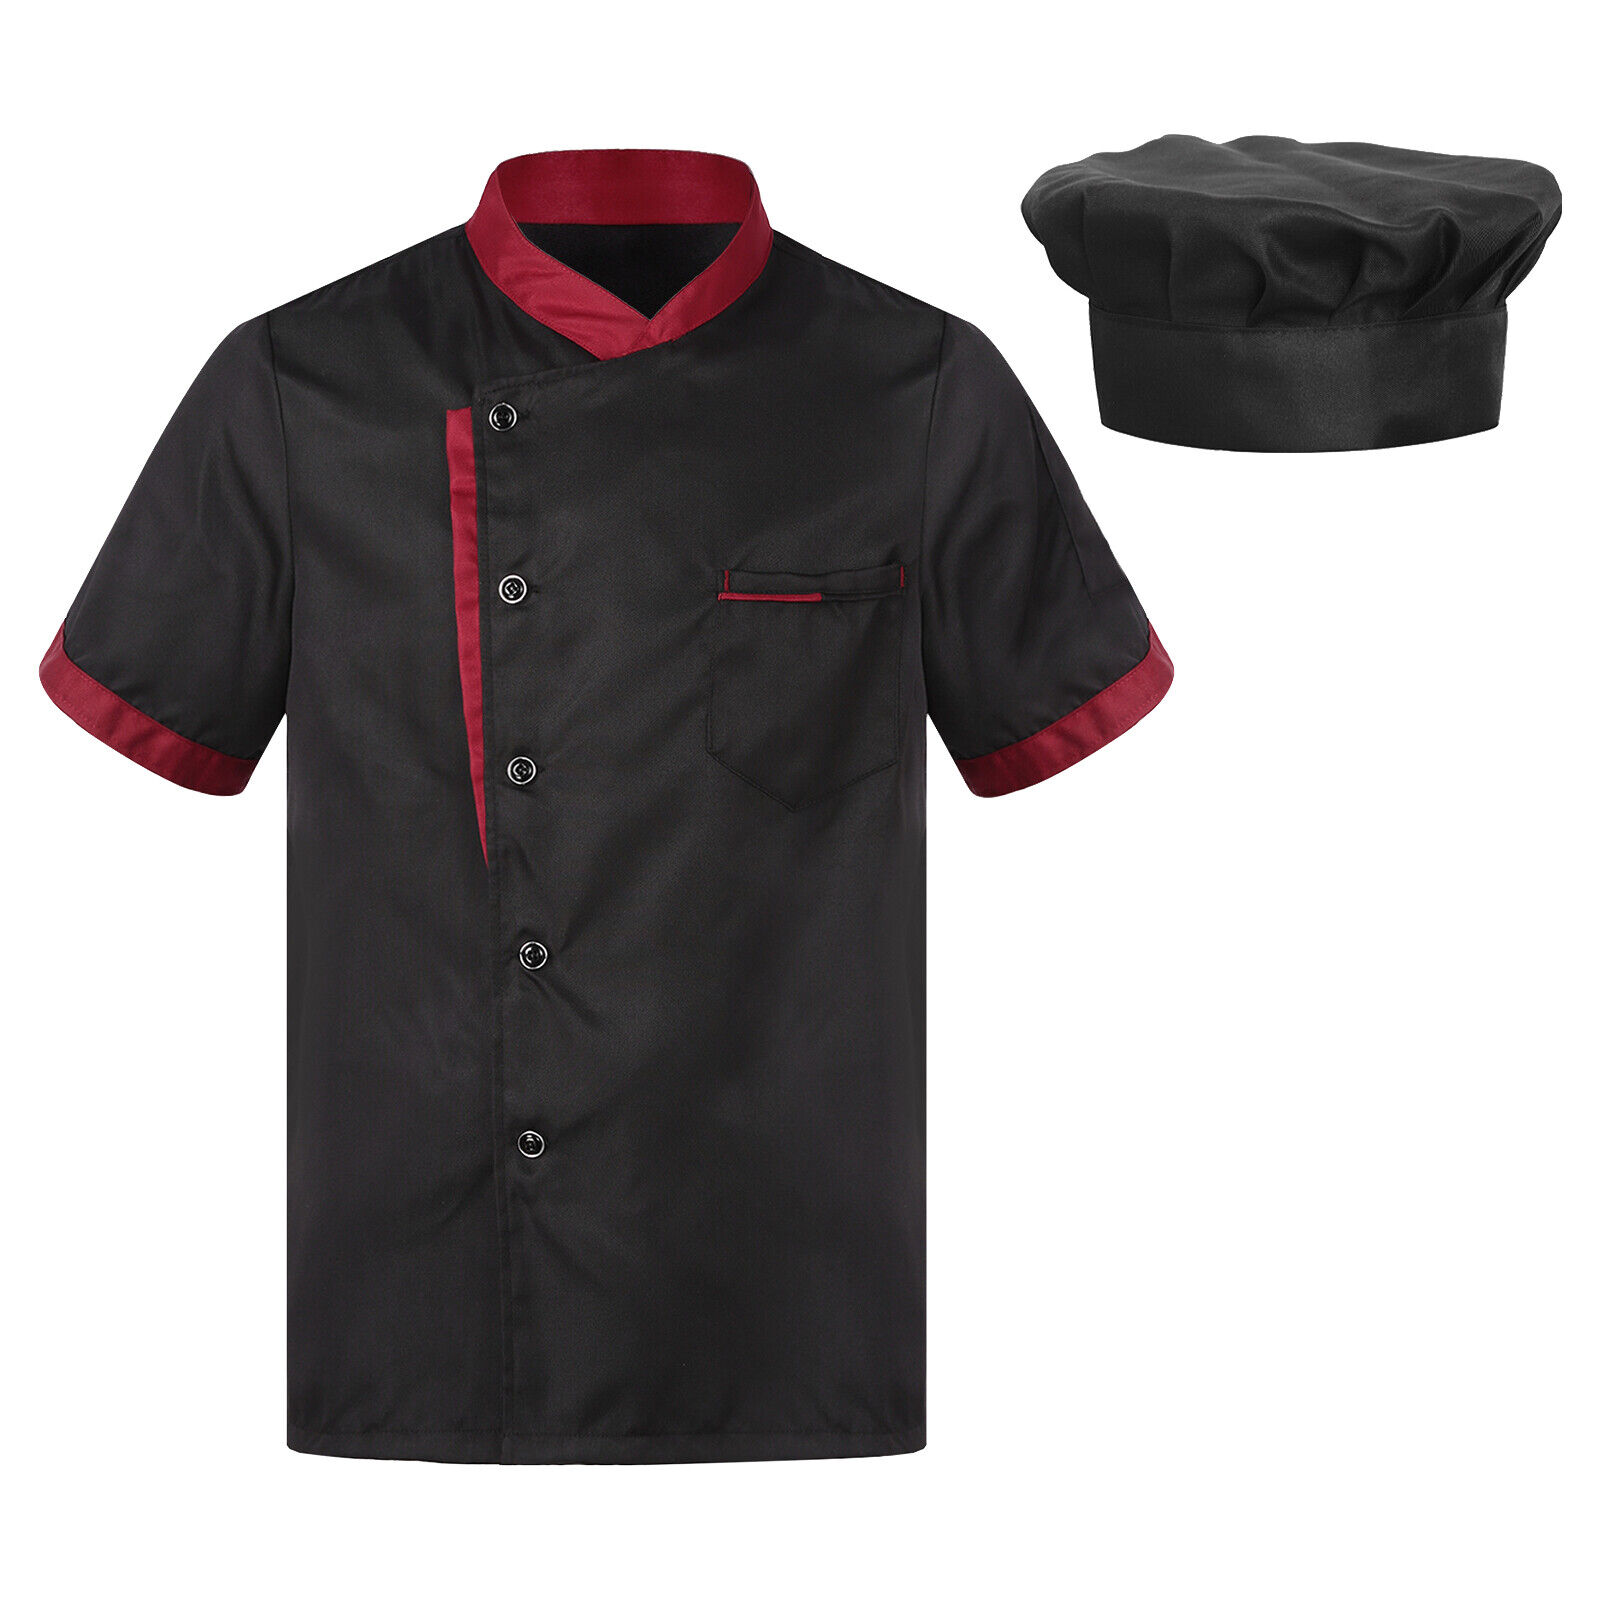 US Mens Chef Jacket Coat Uniform Kitchen Short Sleeve Jackets Work Cook Top +Hat